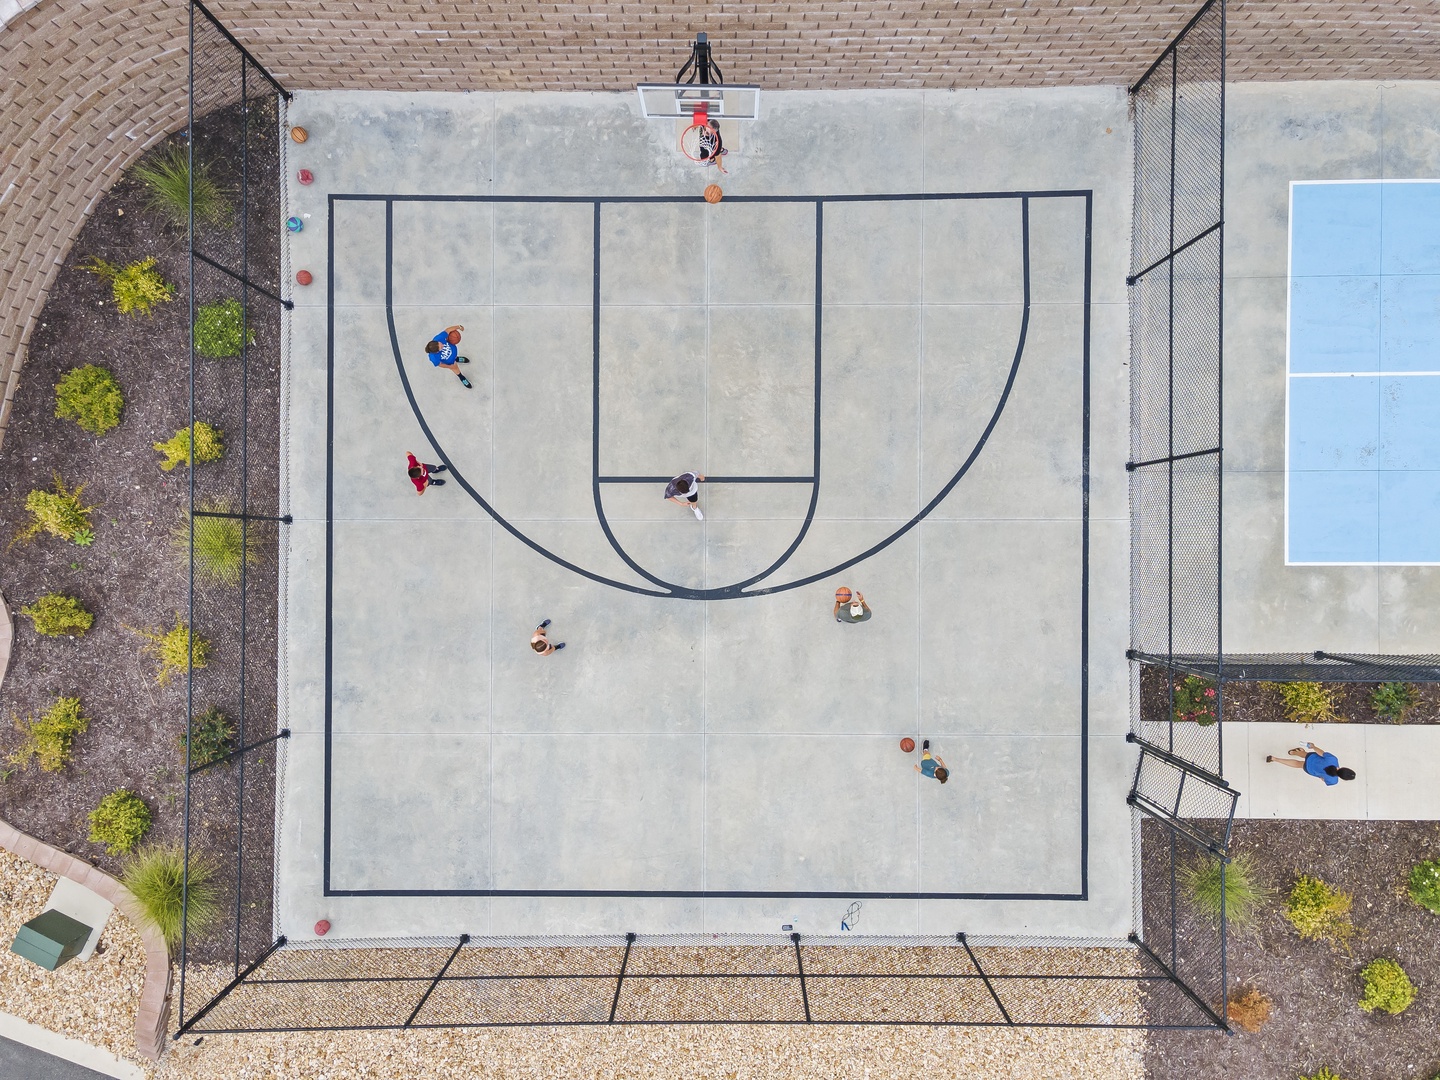 Communal basketball court